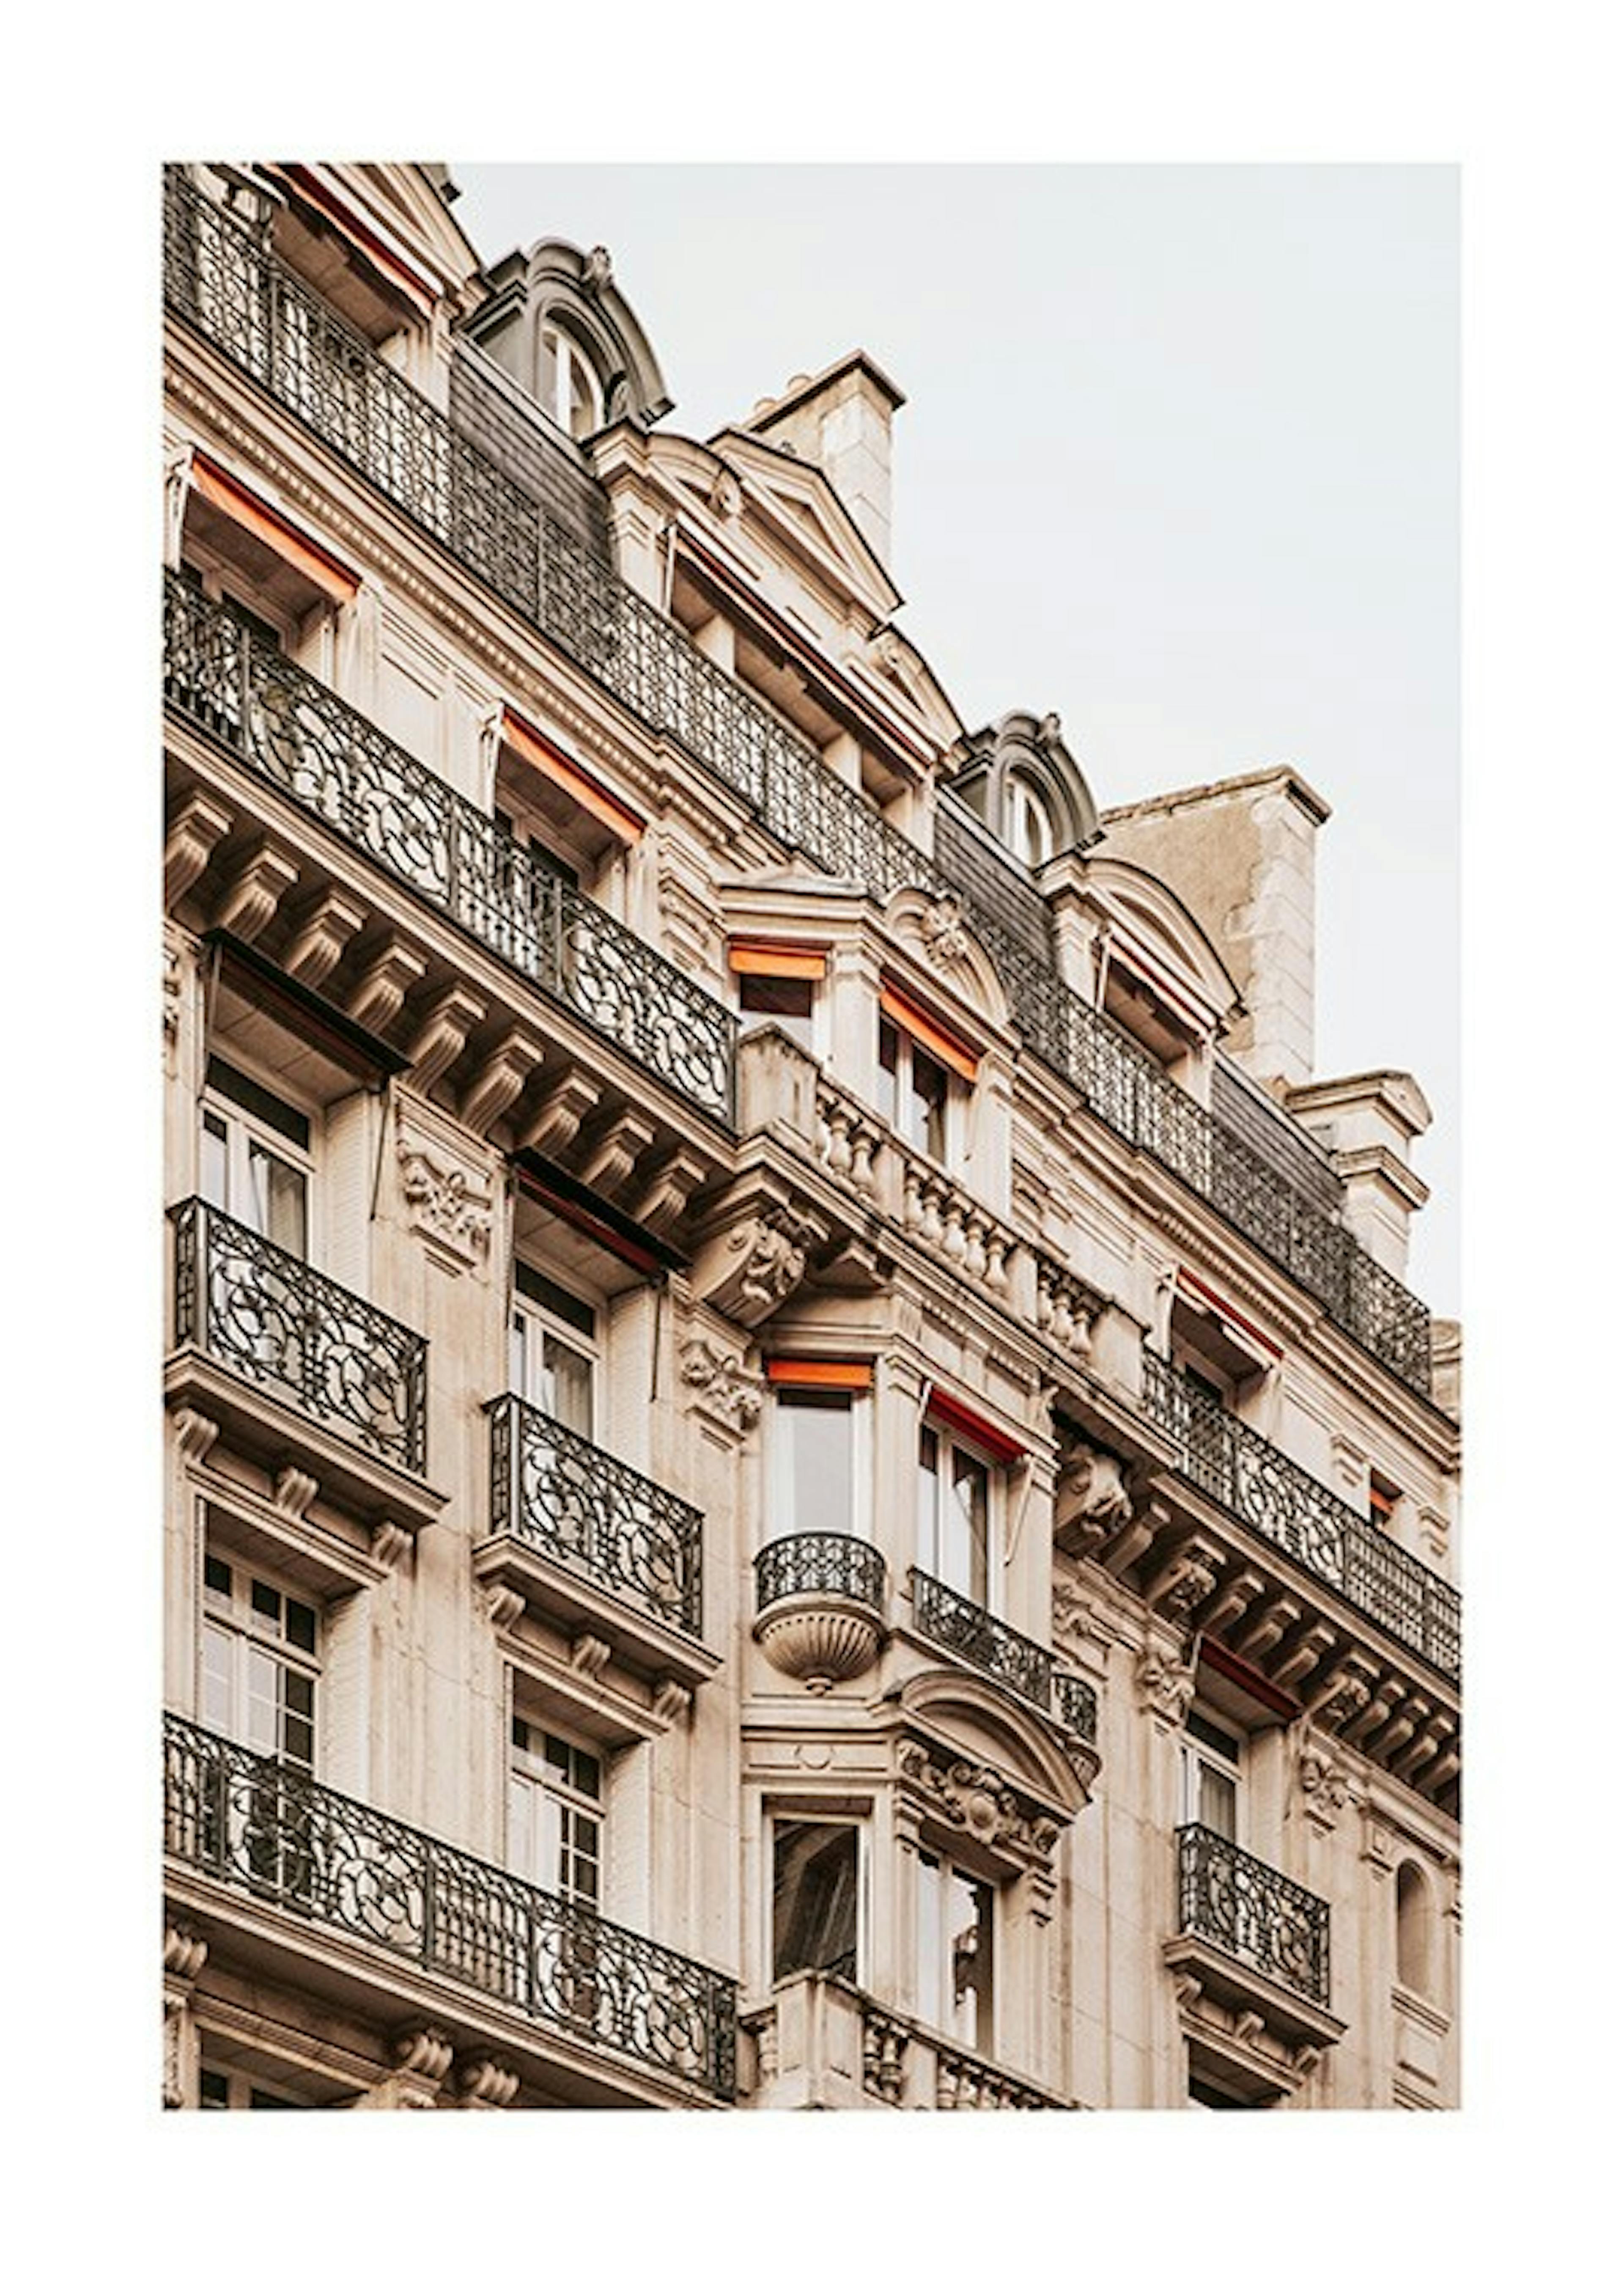 Facade With Balconies Poster 0